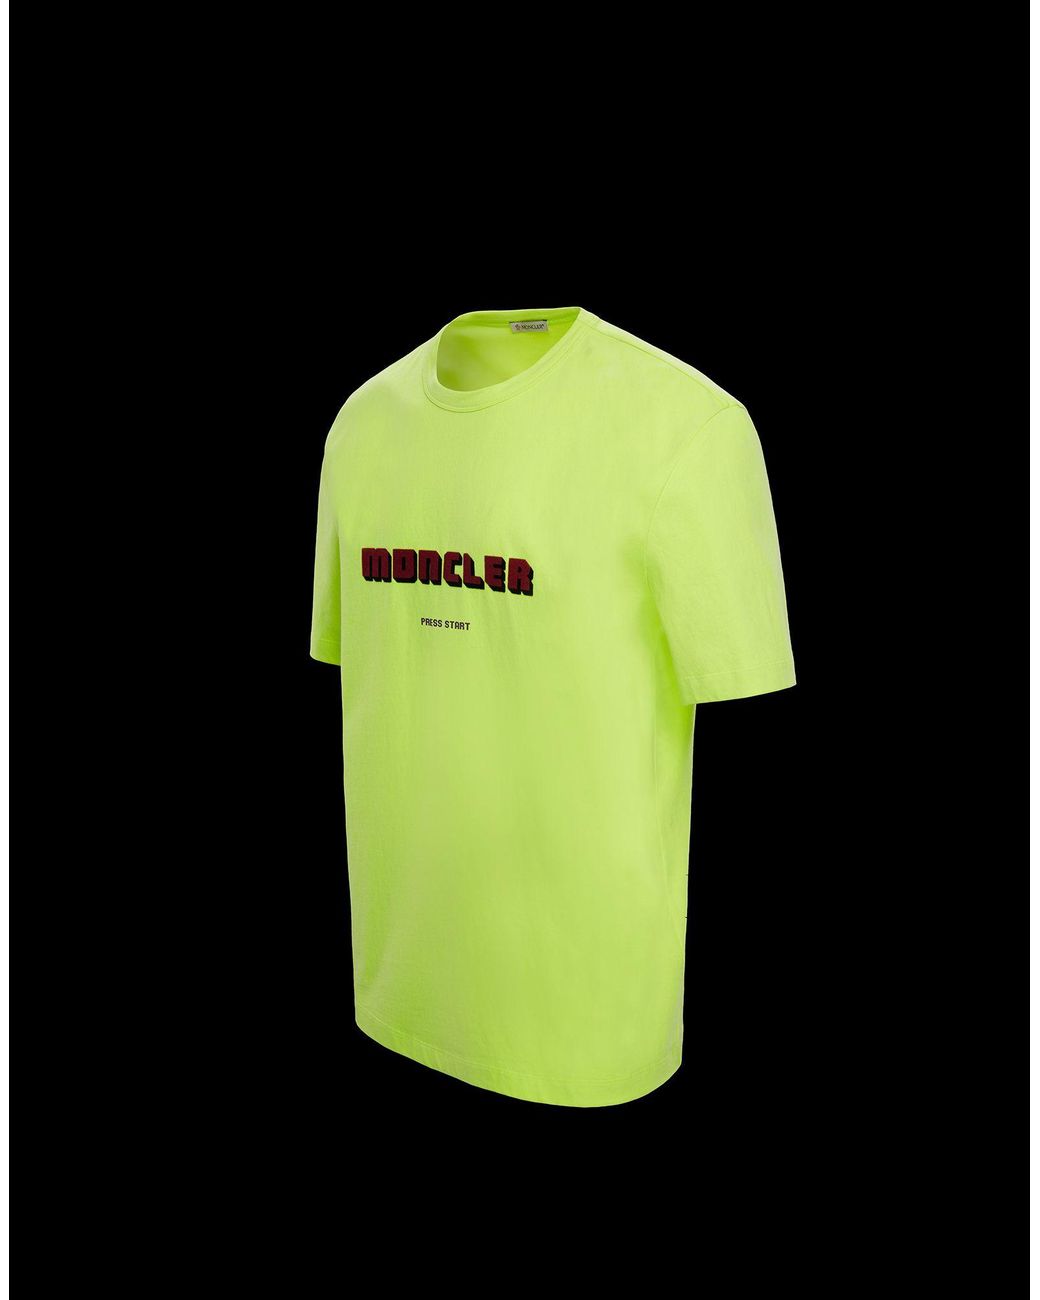 Moncler T-shirt in Green for Men | Lyst